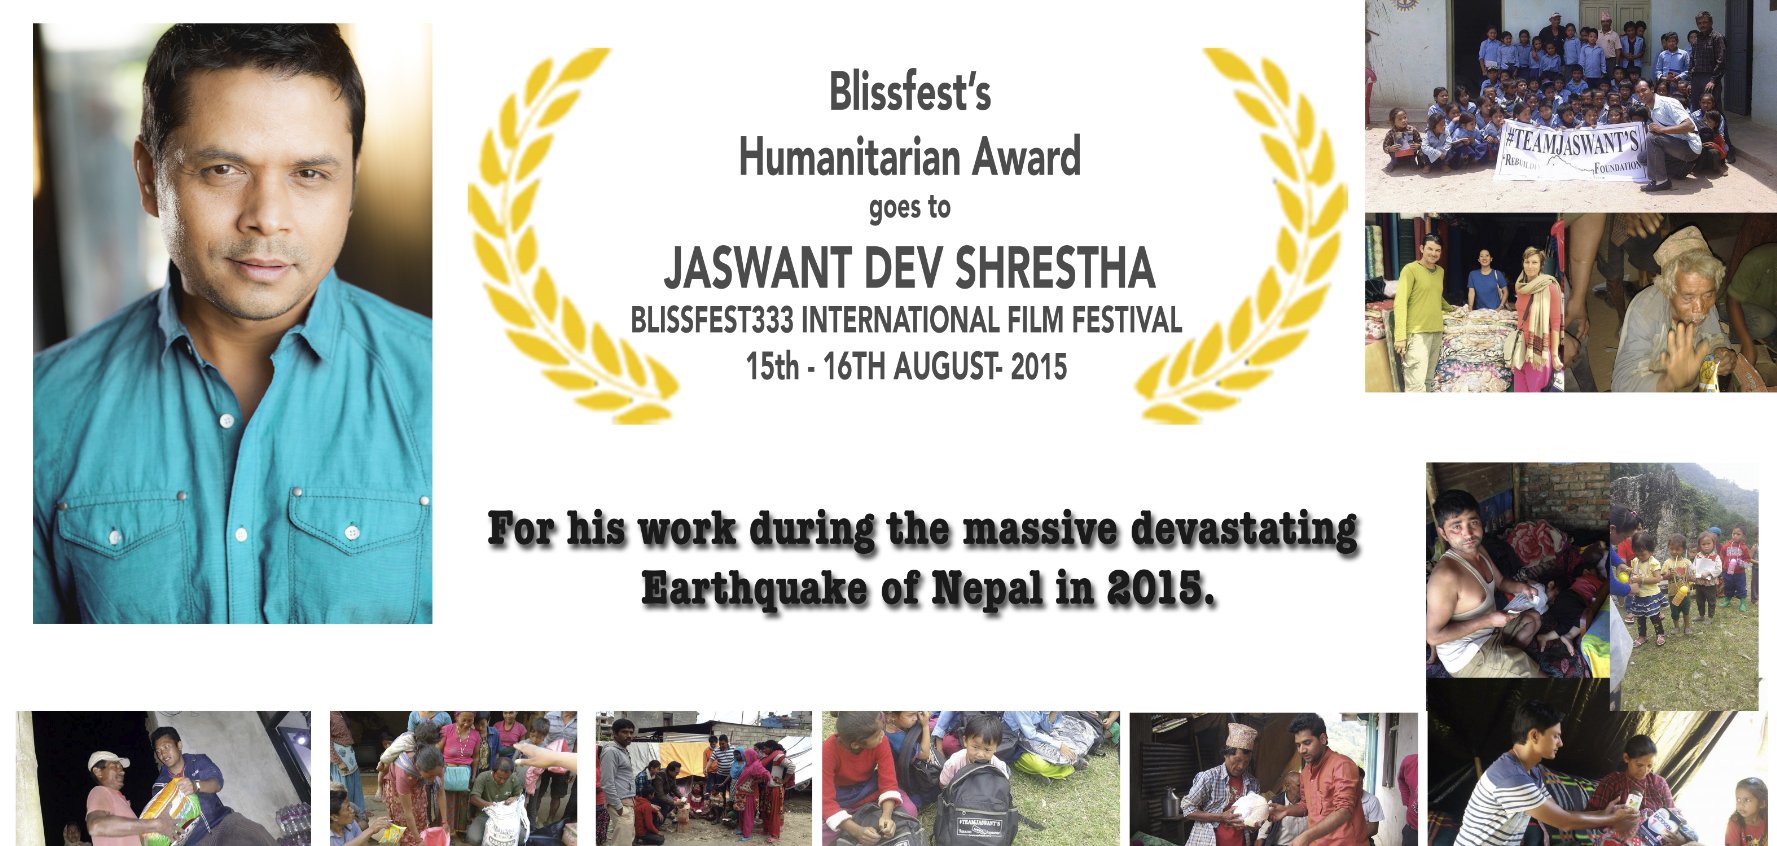 Jaswant Dev Shrestha